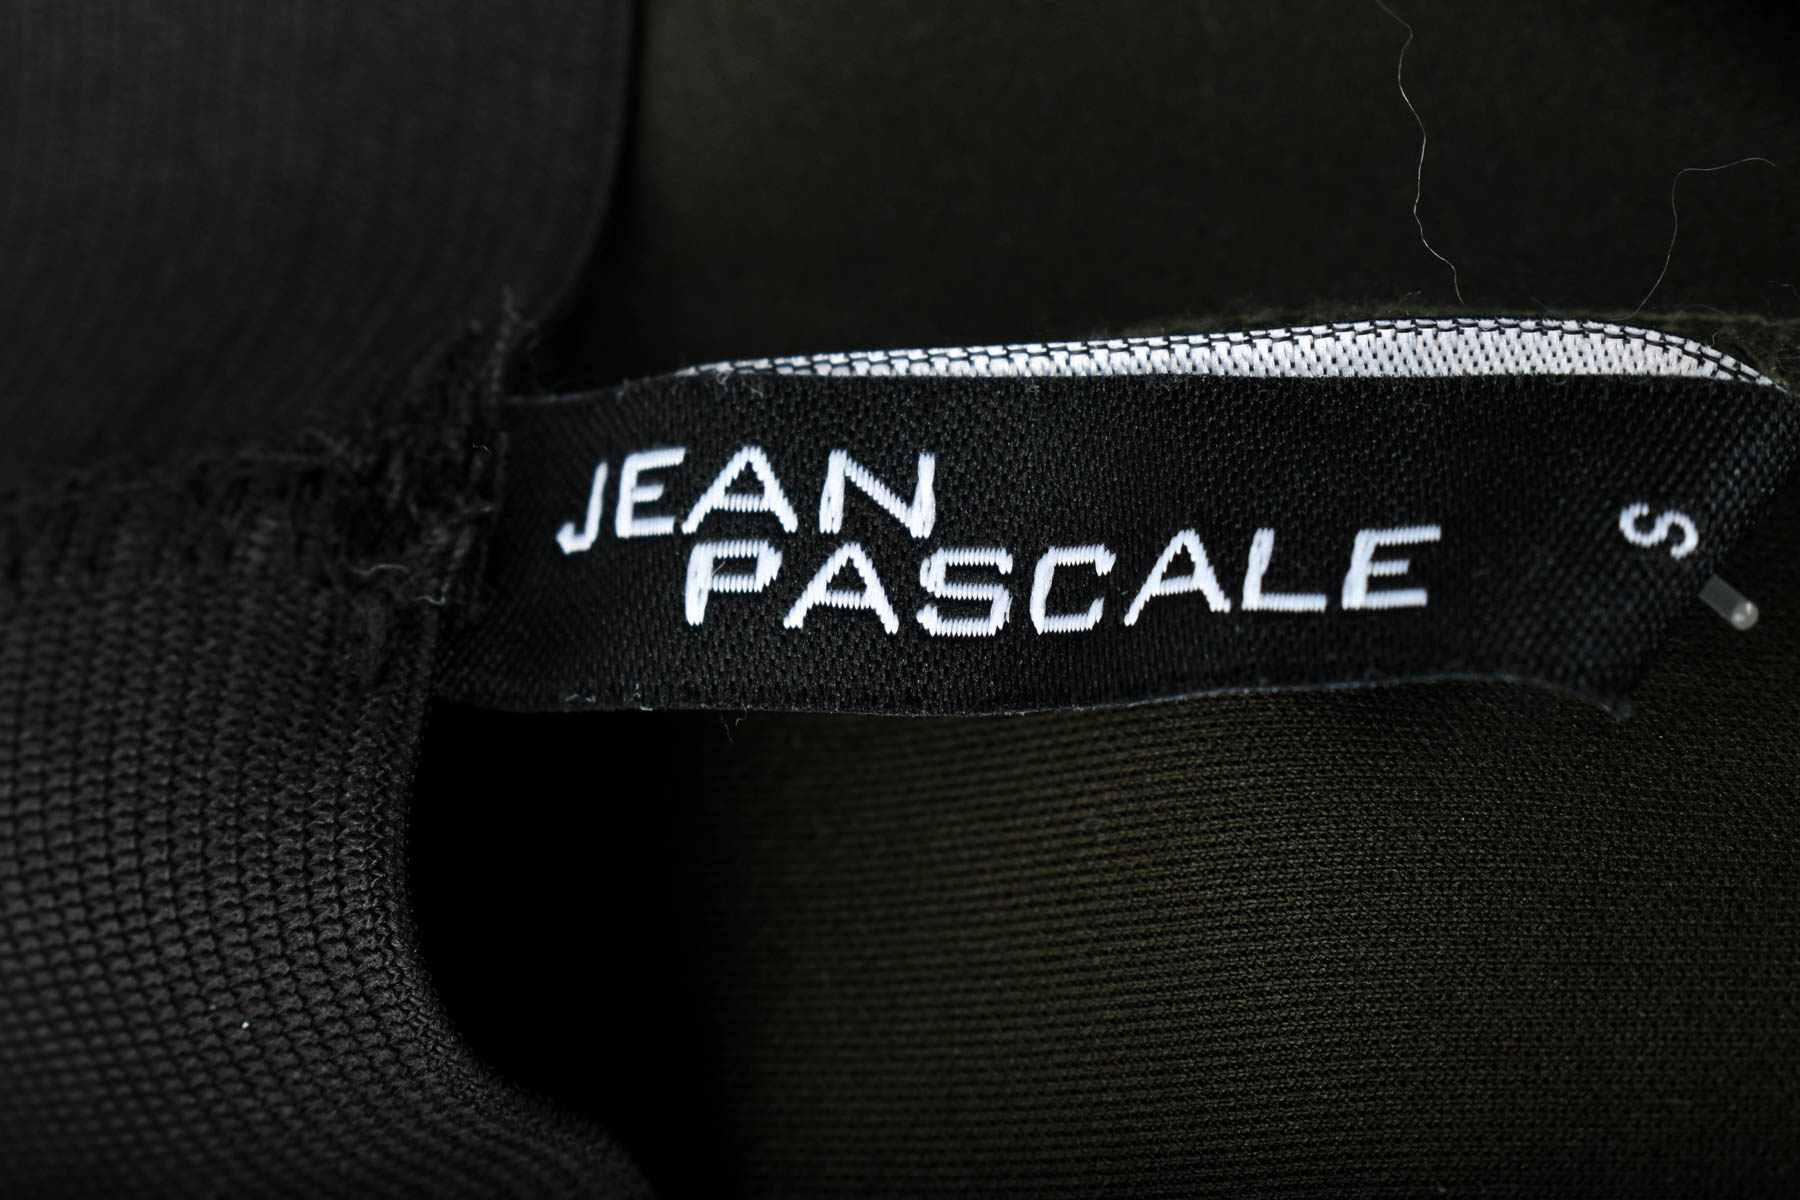 Leggings - Jean Pascale - 2